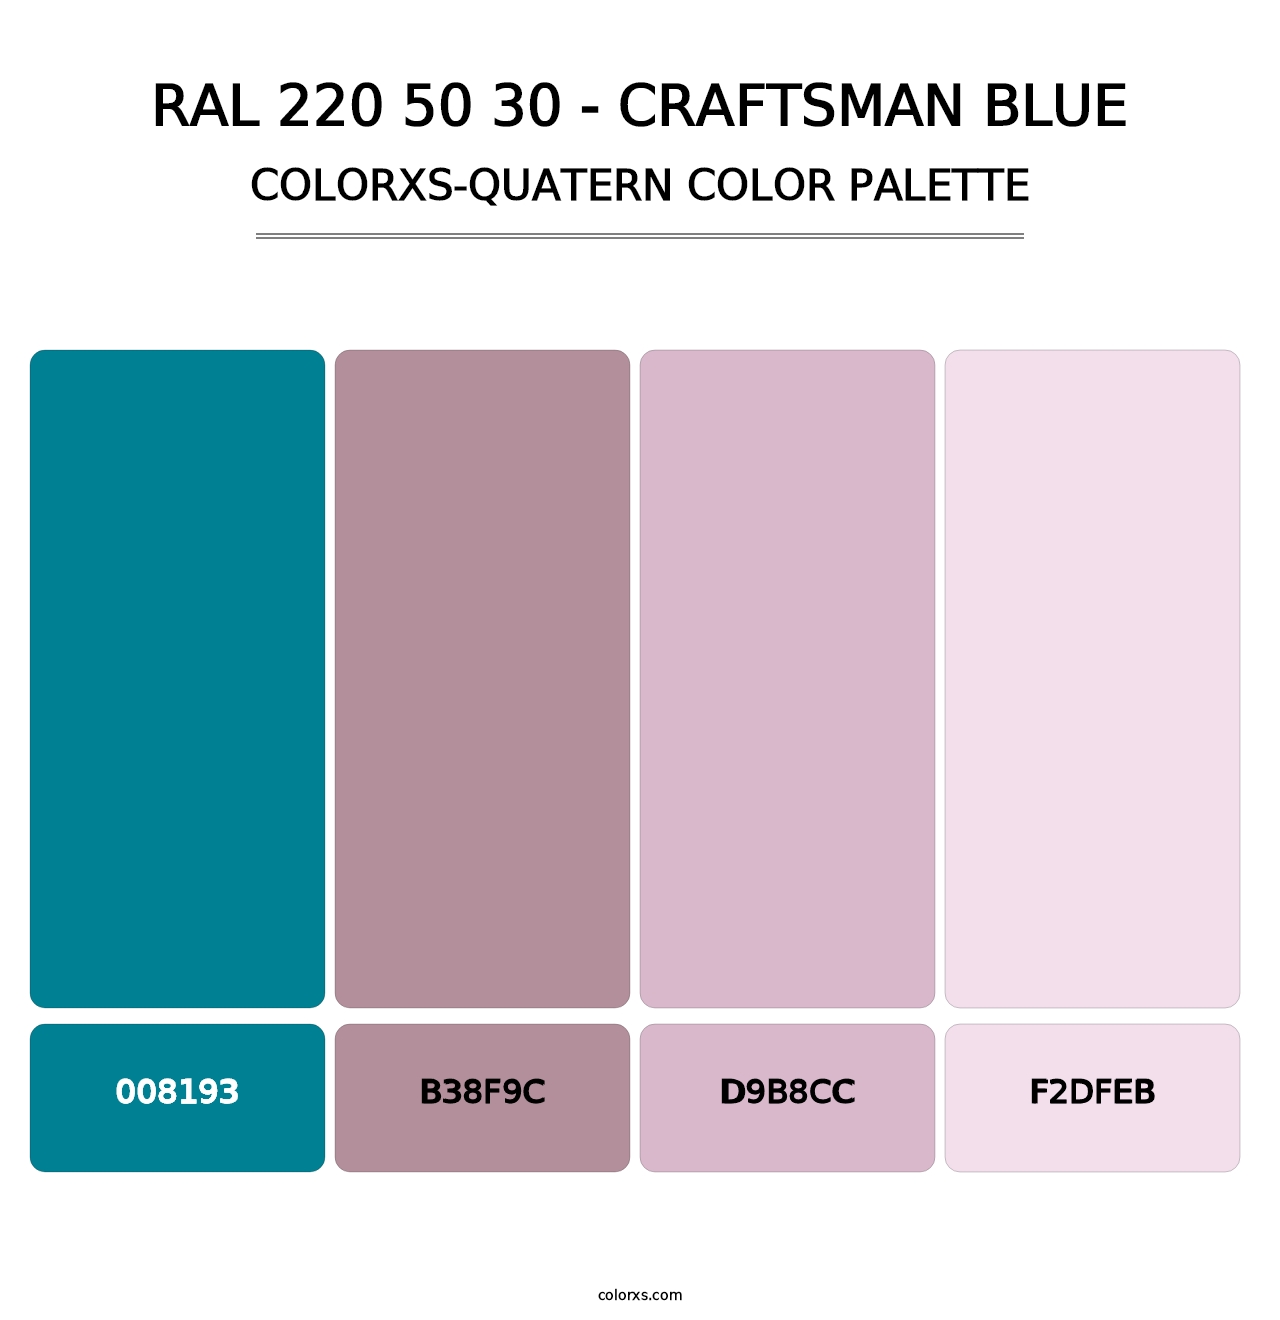 RAL 220 50 30 - Craftsman Blue - Colorxs Quatern Palette